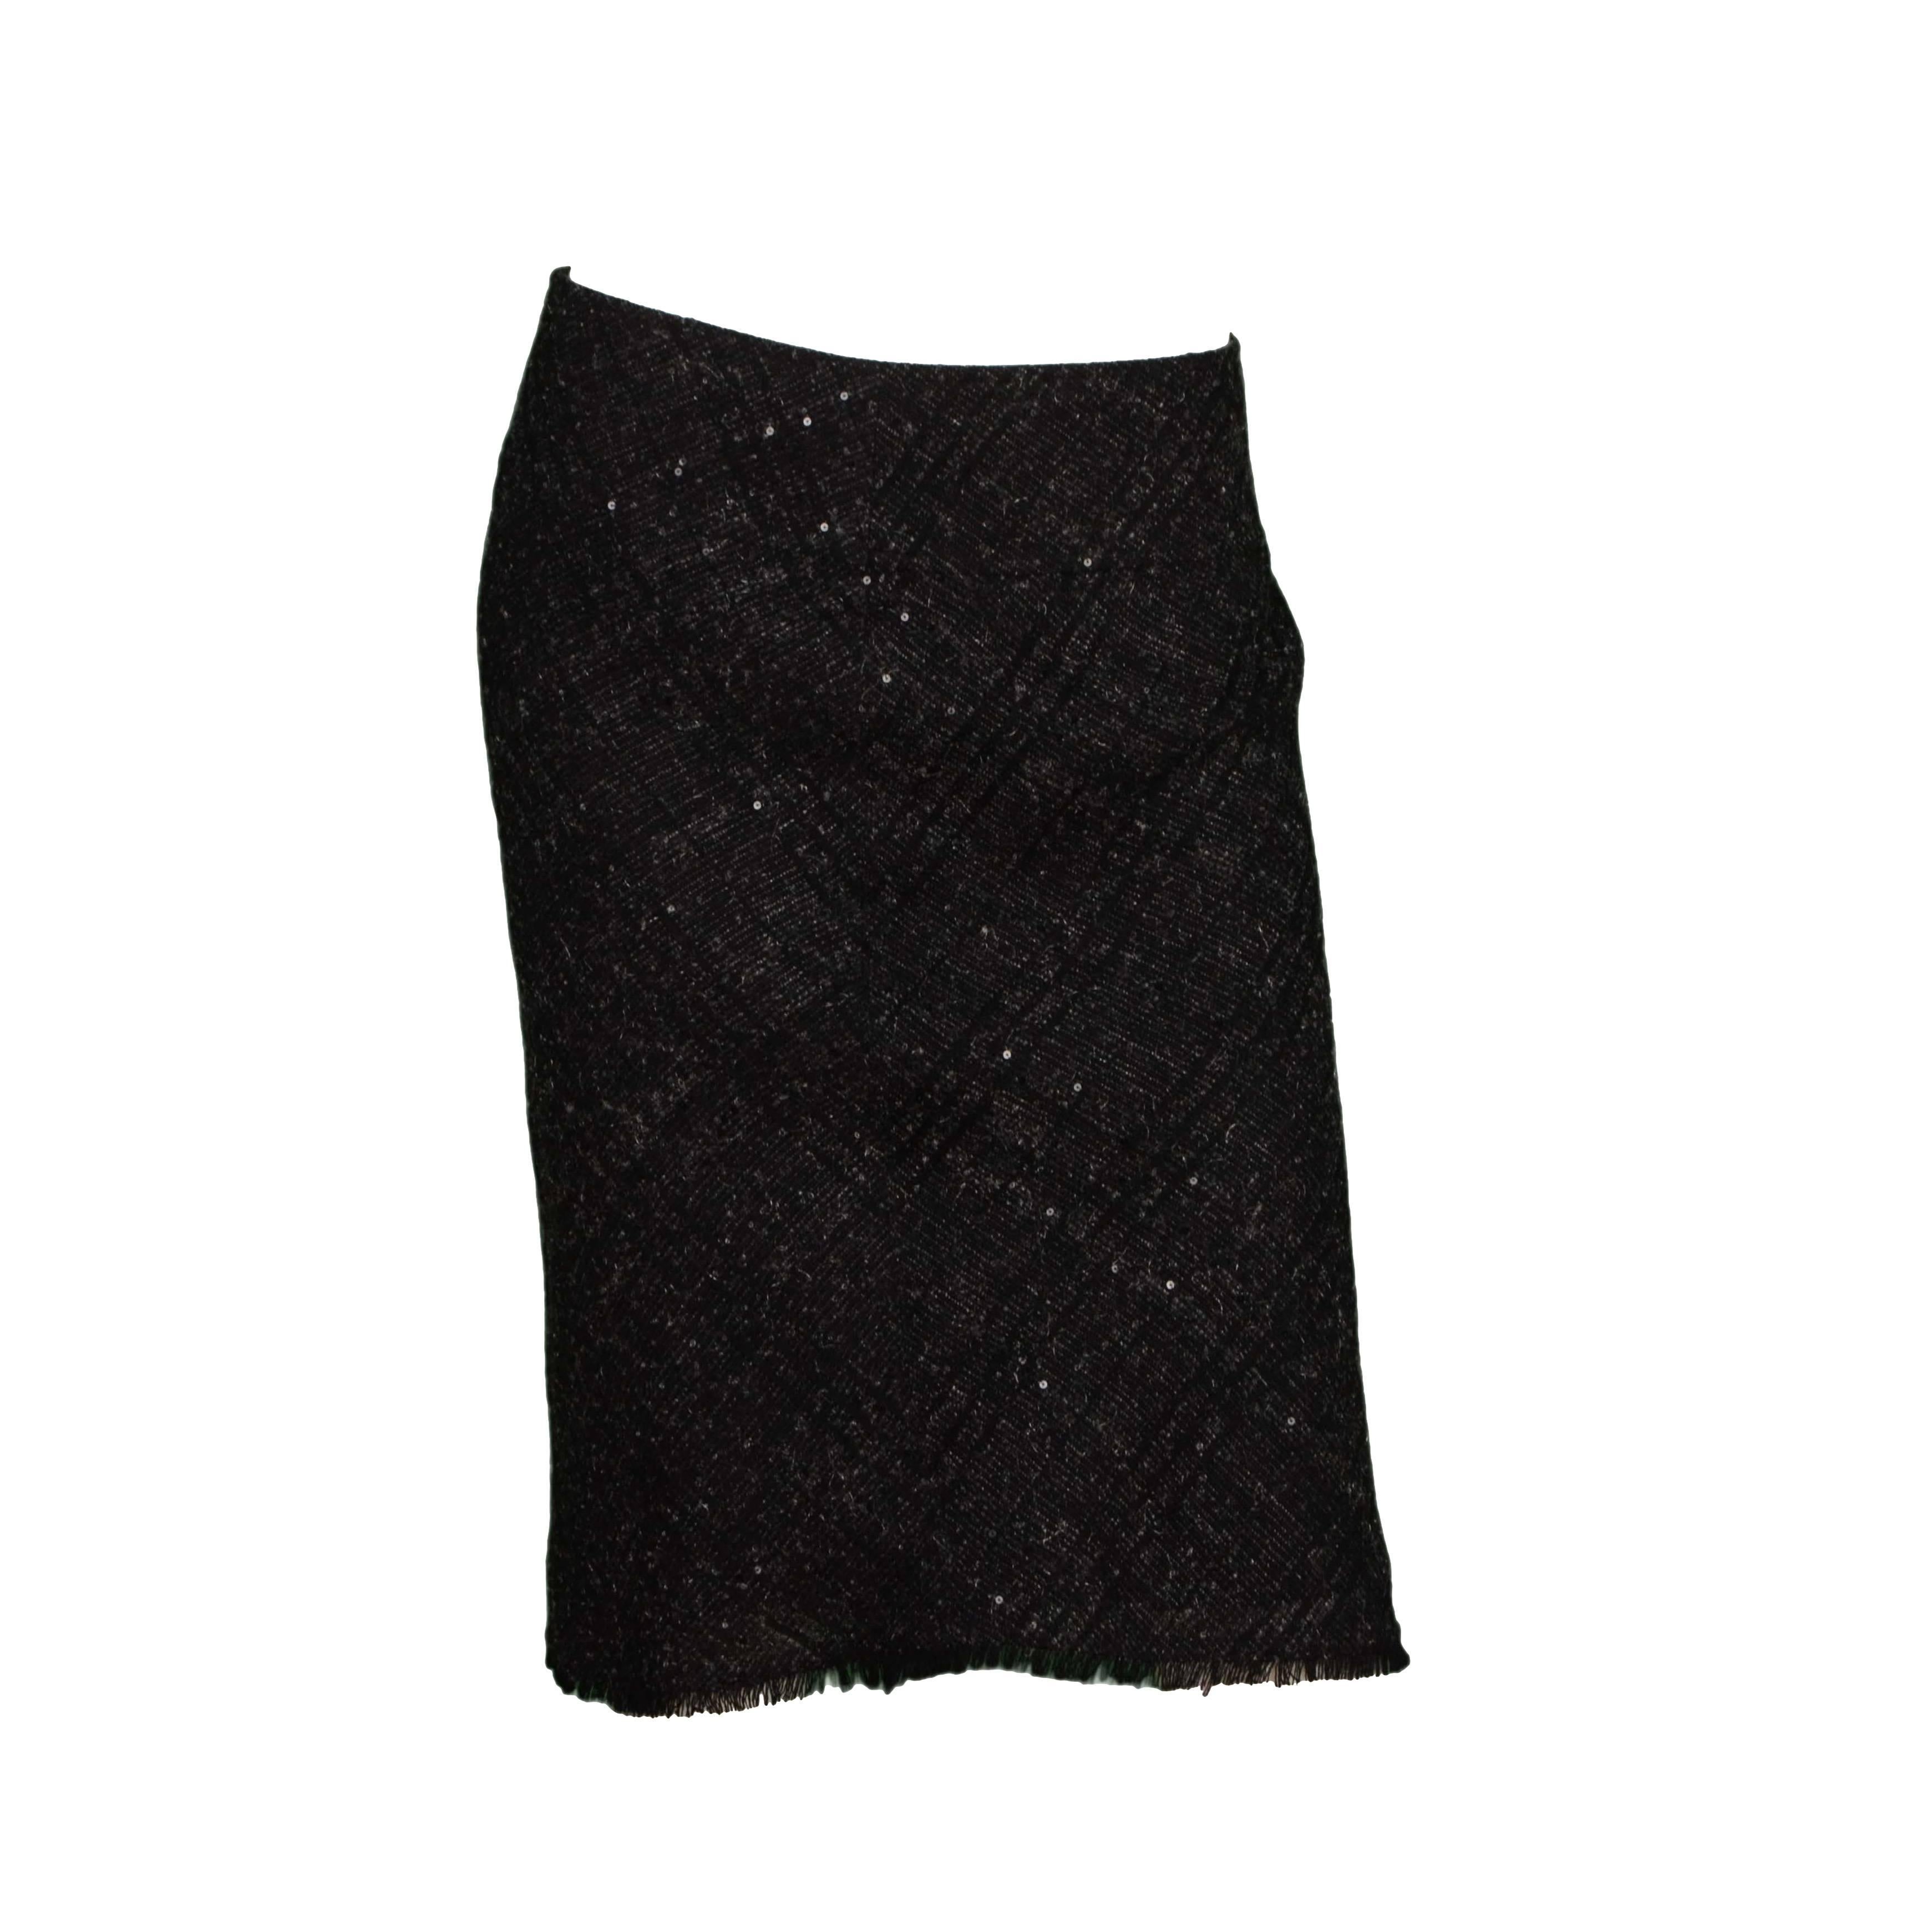 Burberry Black & Grey Wool Pencil Skirt sz 4